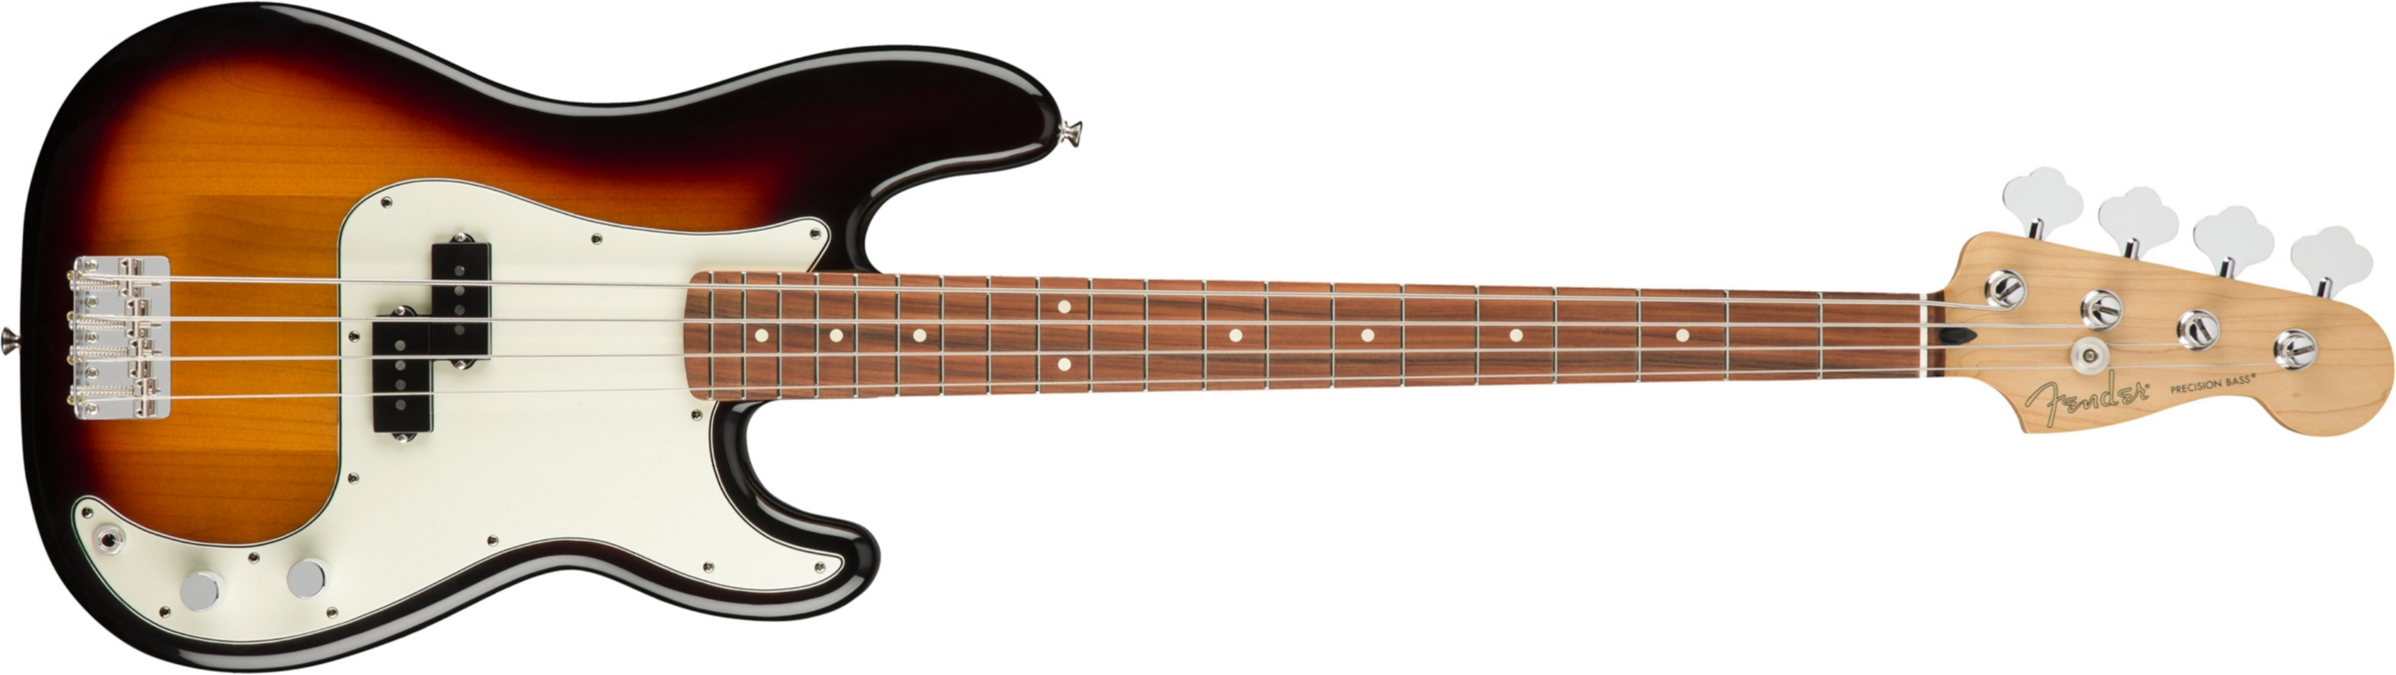 Fender Precision Bass Player Mex Pf - 3-color Sunburst - Solid body elektrische bas - Main picture